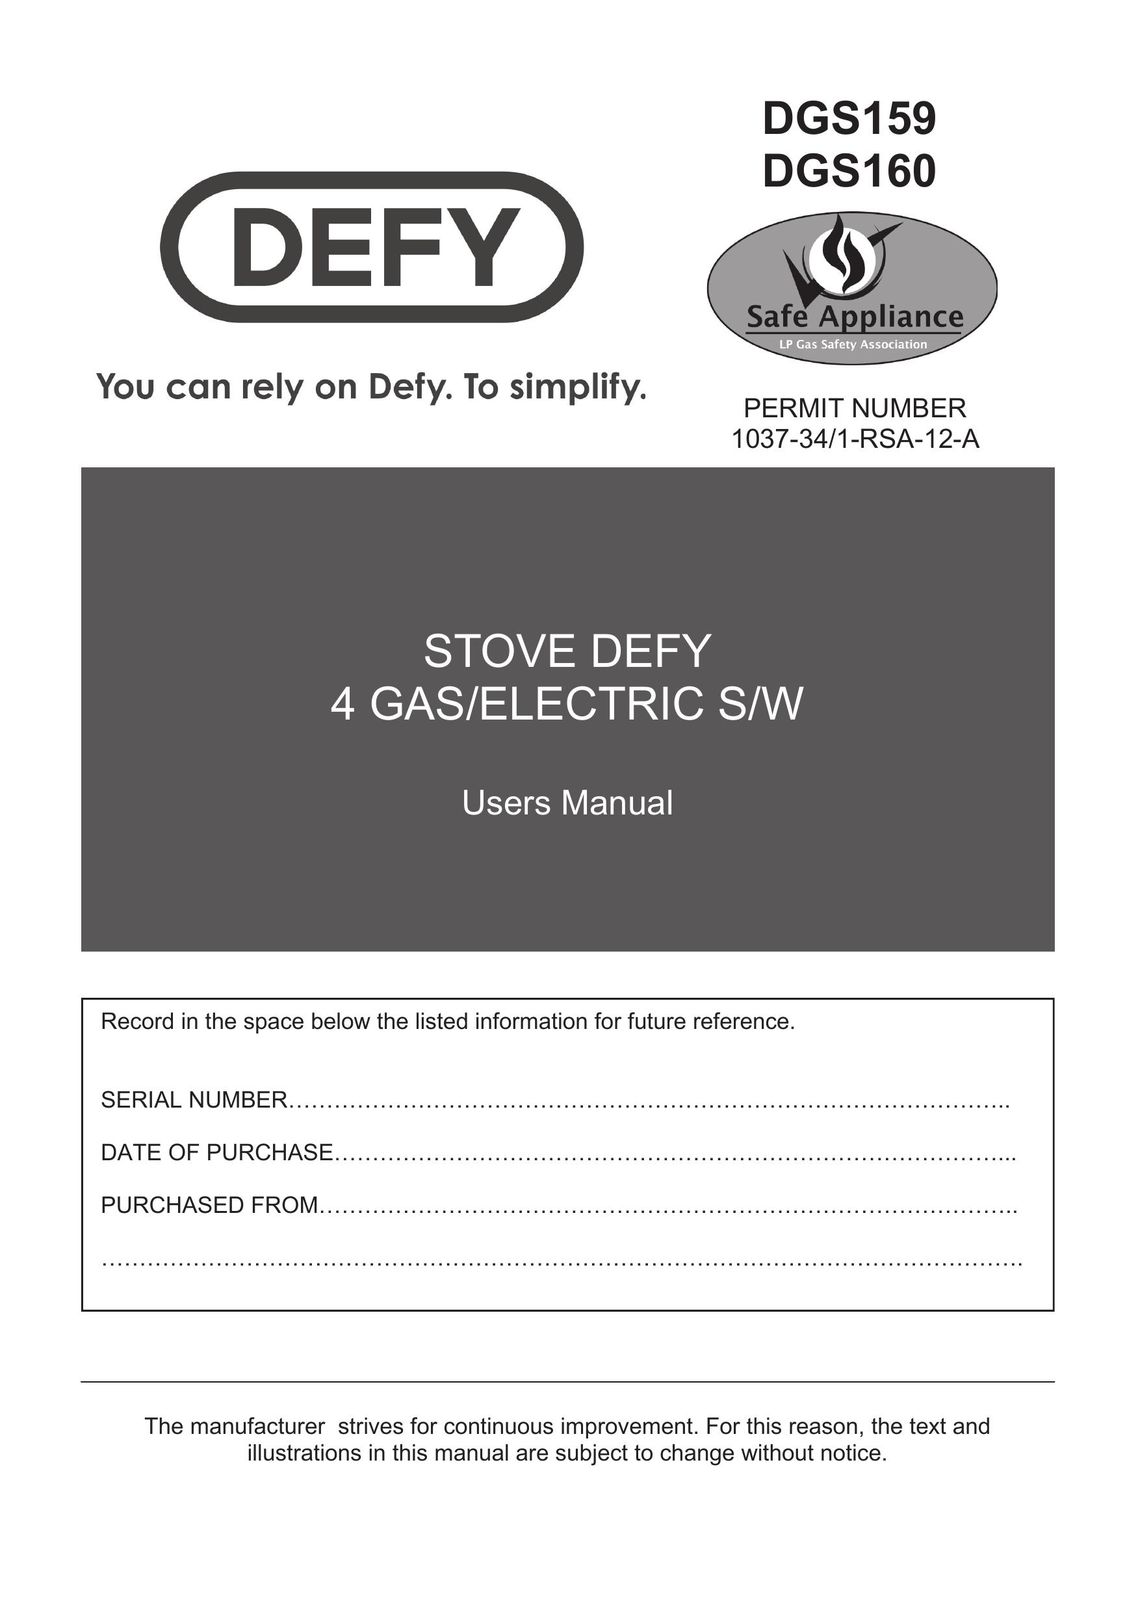 Defy Appliances DGS159 Double Oven User Manual